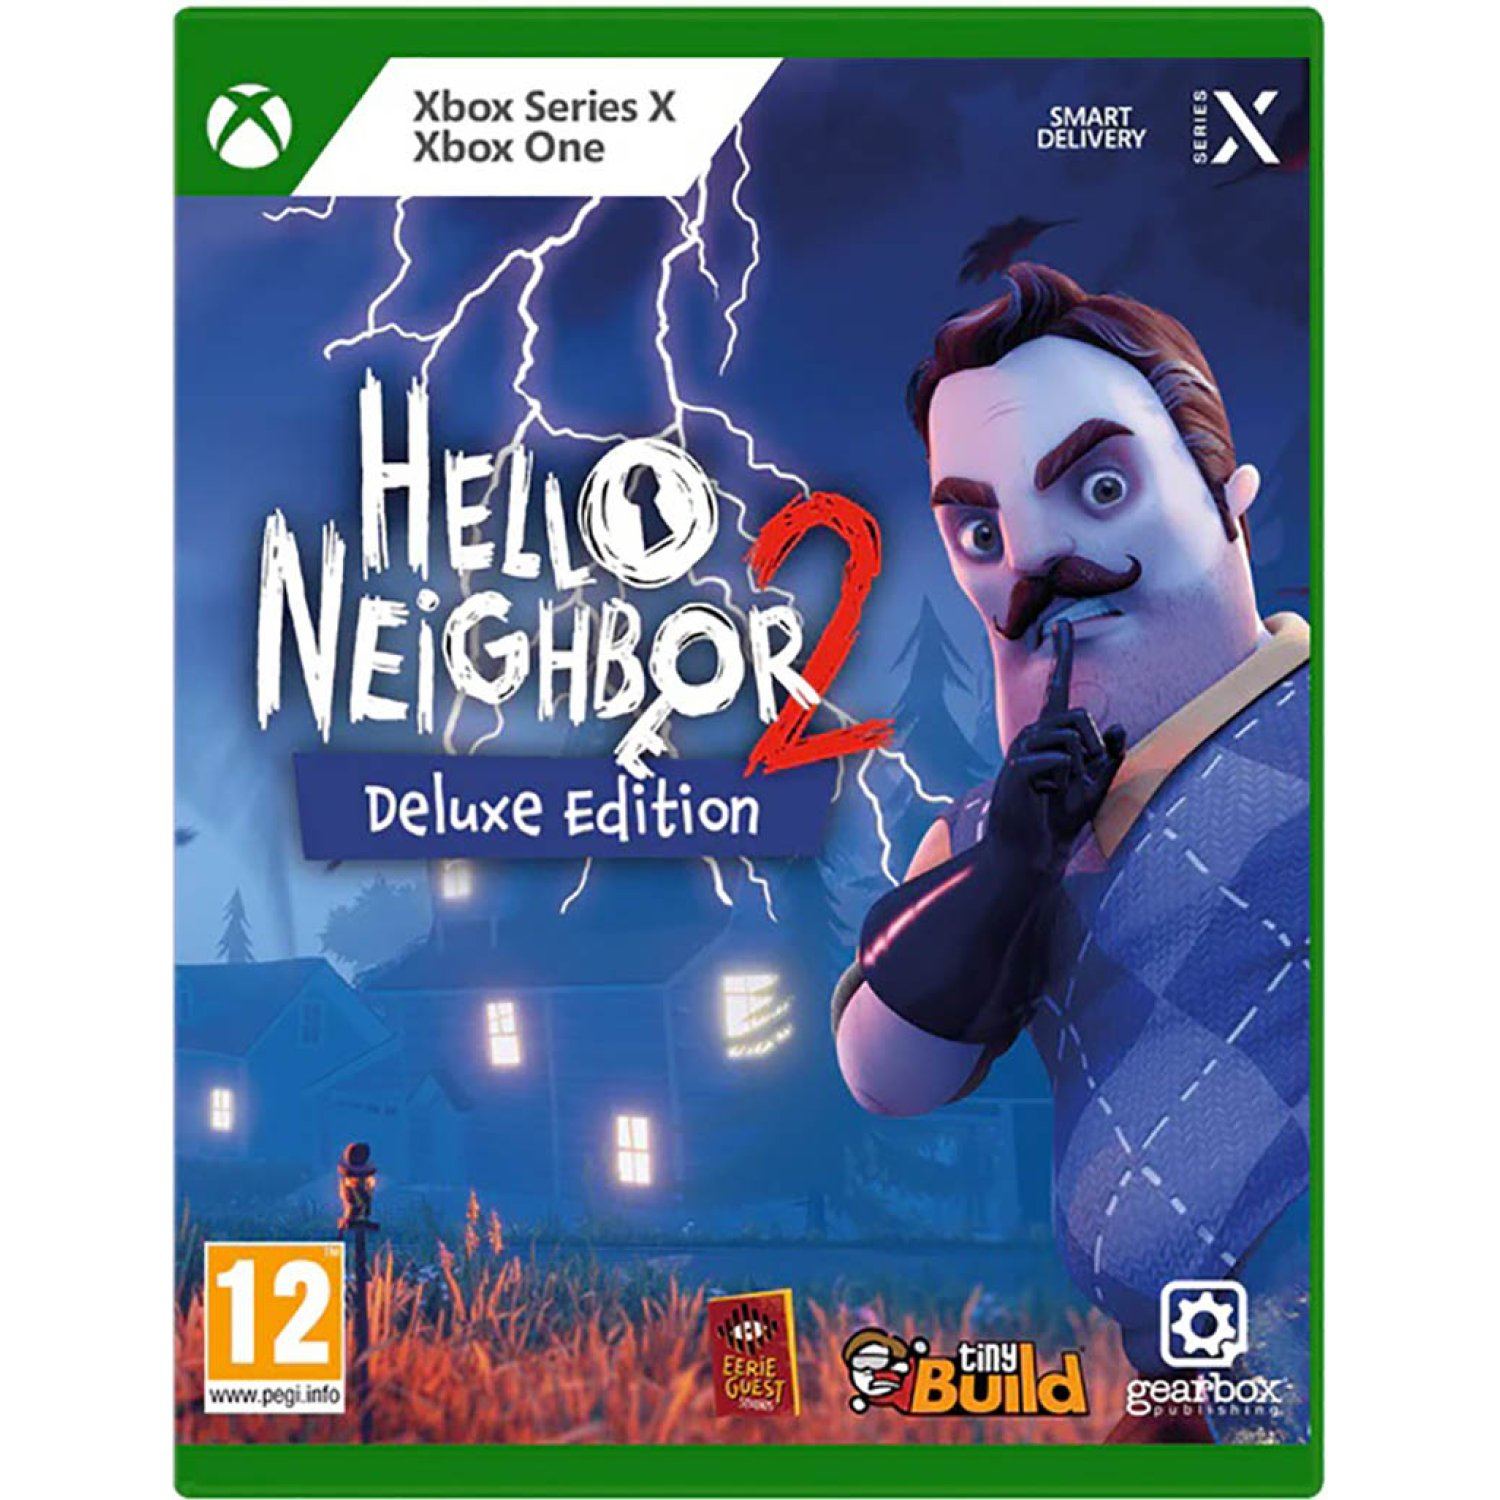 Hello Neighbor 2 Deluxe Edition – Xbox Series X